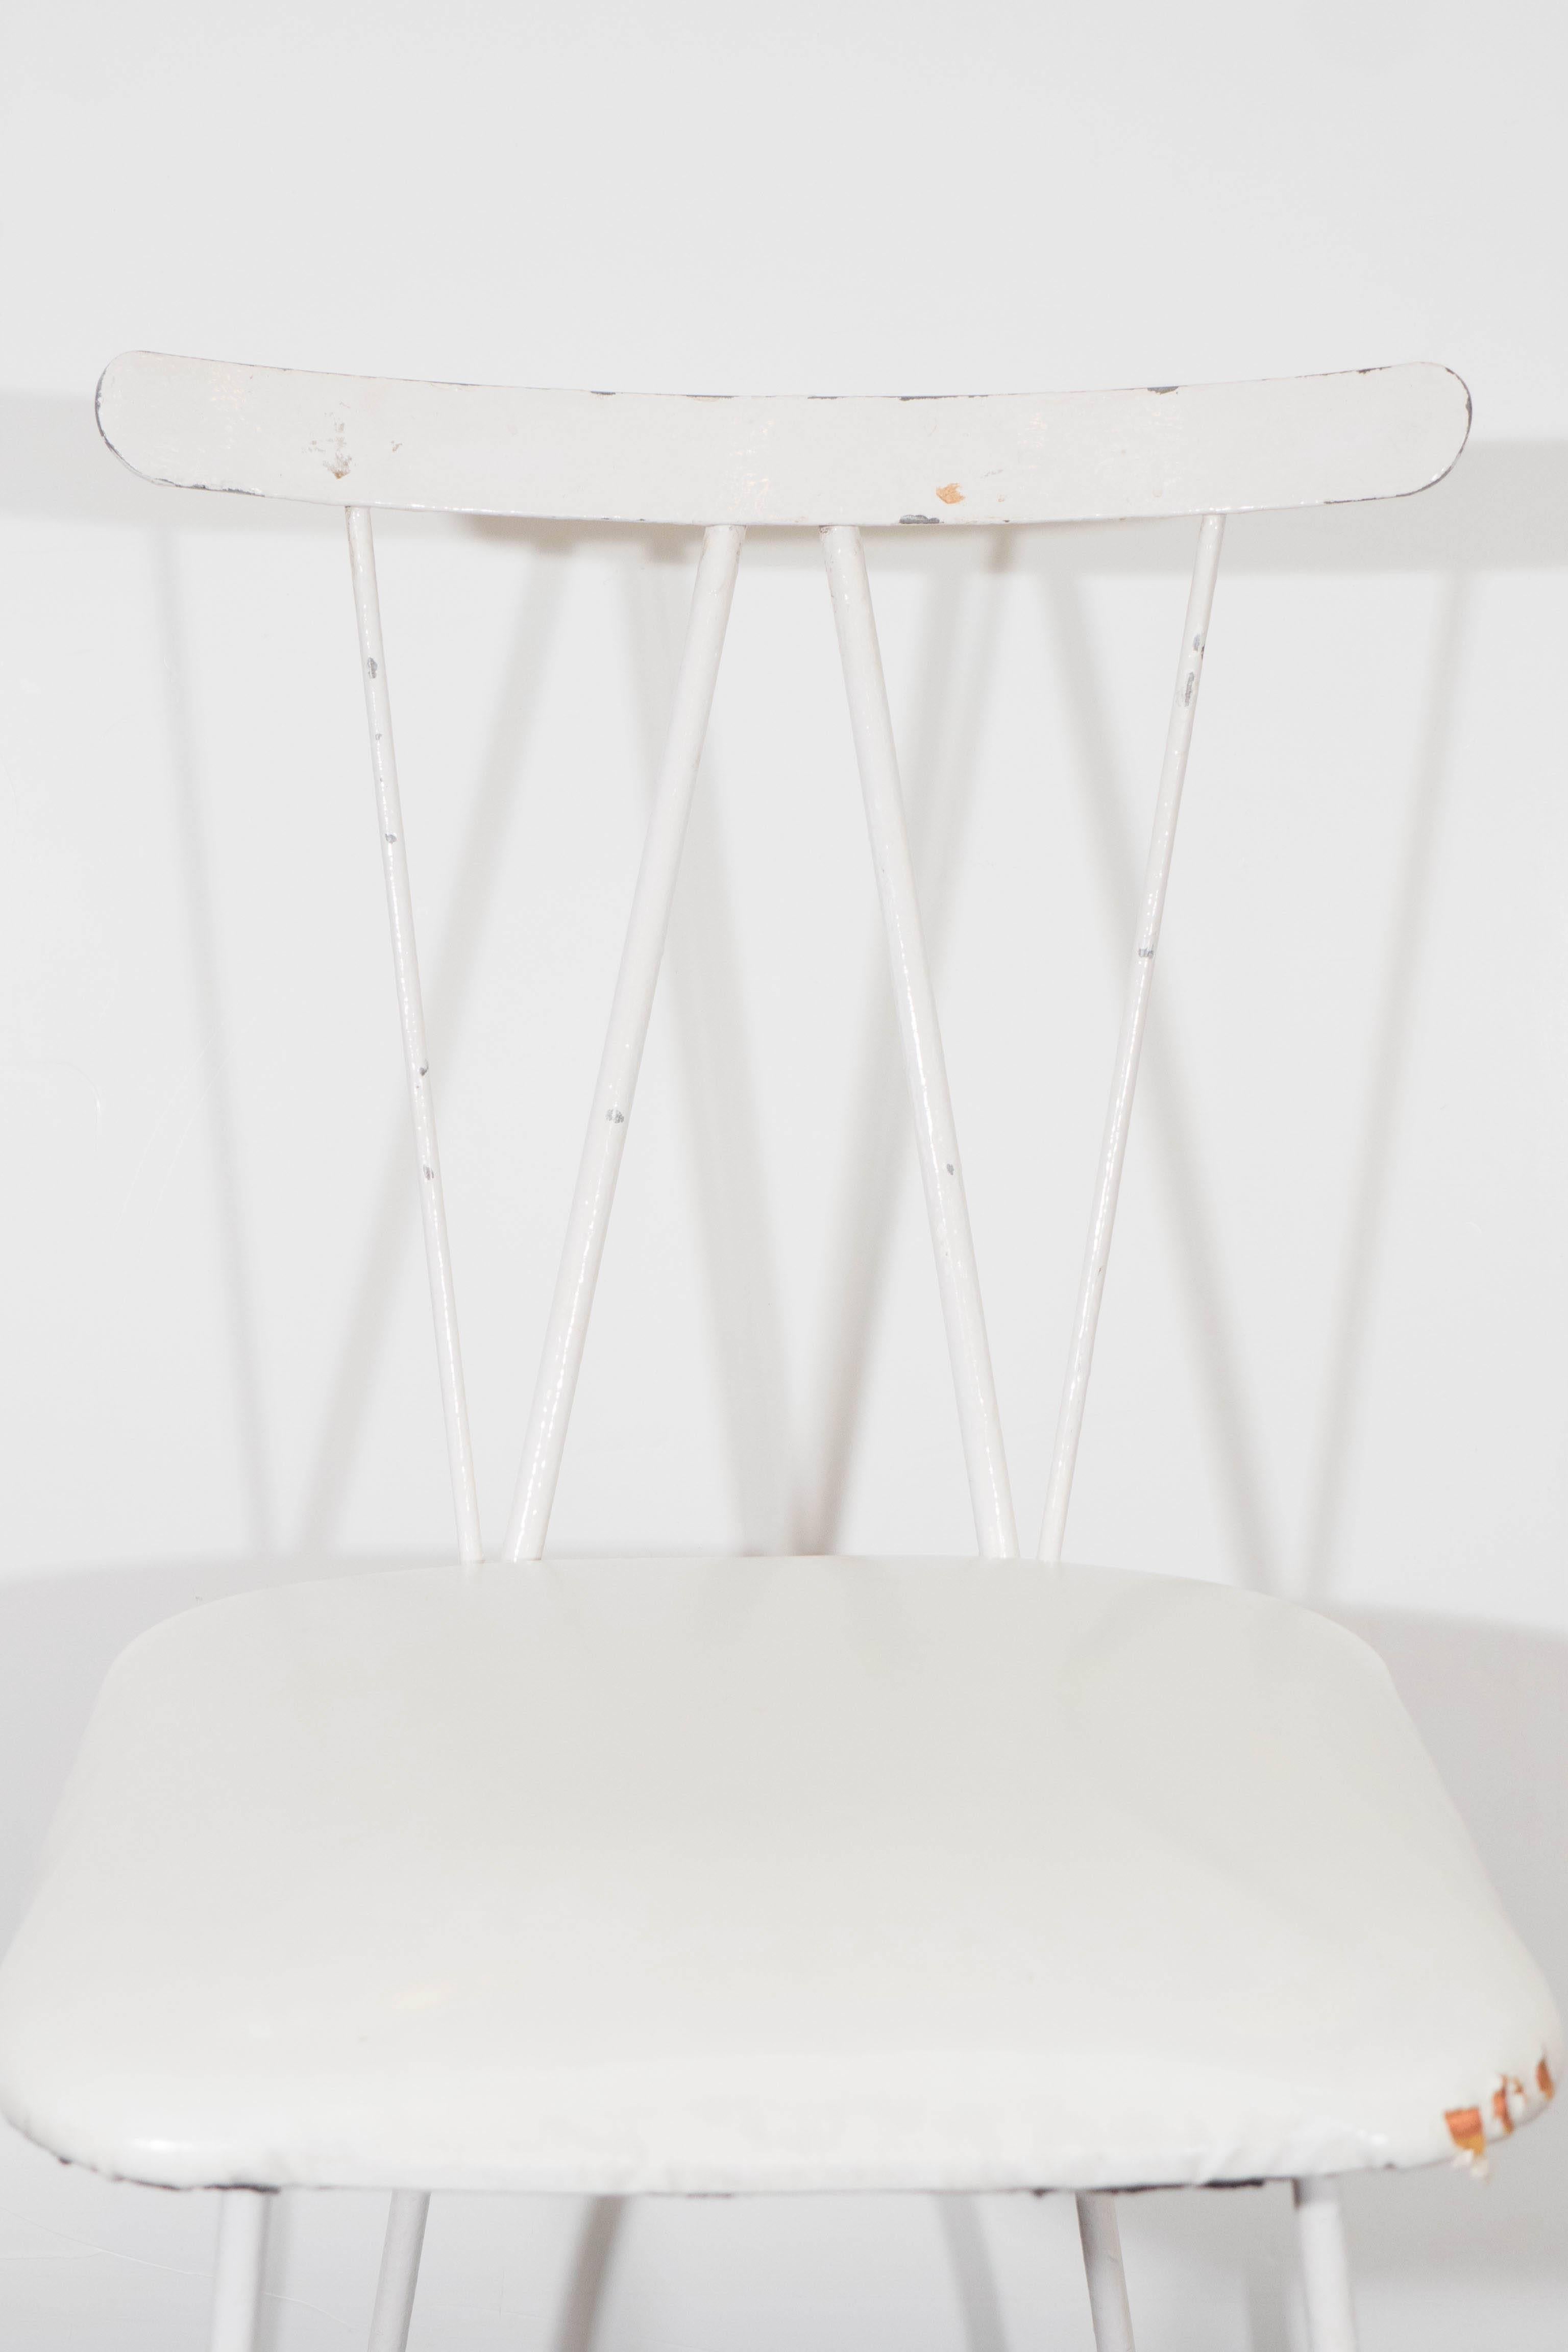 Mid-Century Modern John Salterini White Side Chair